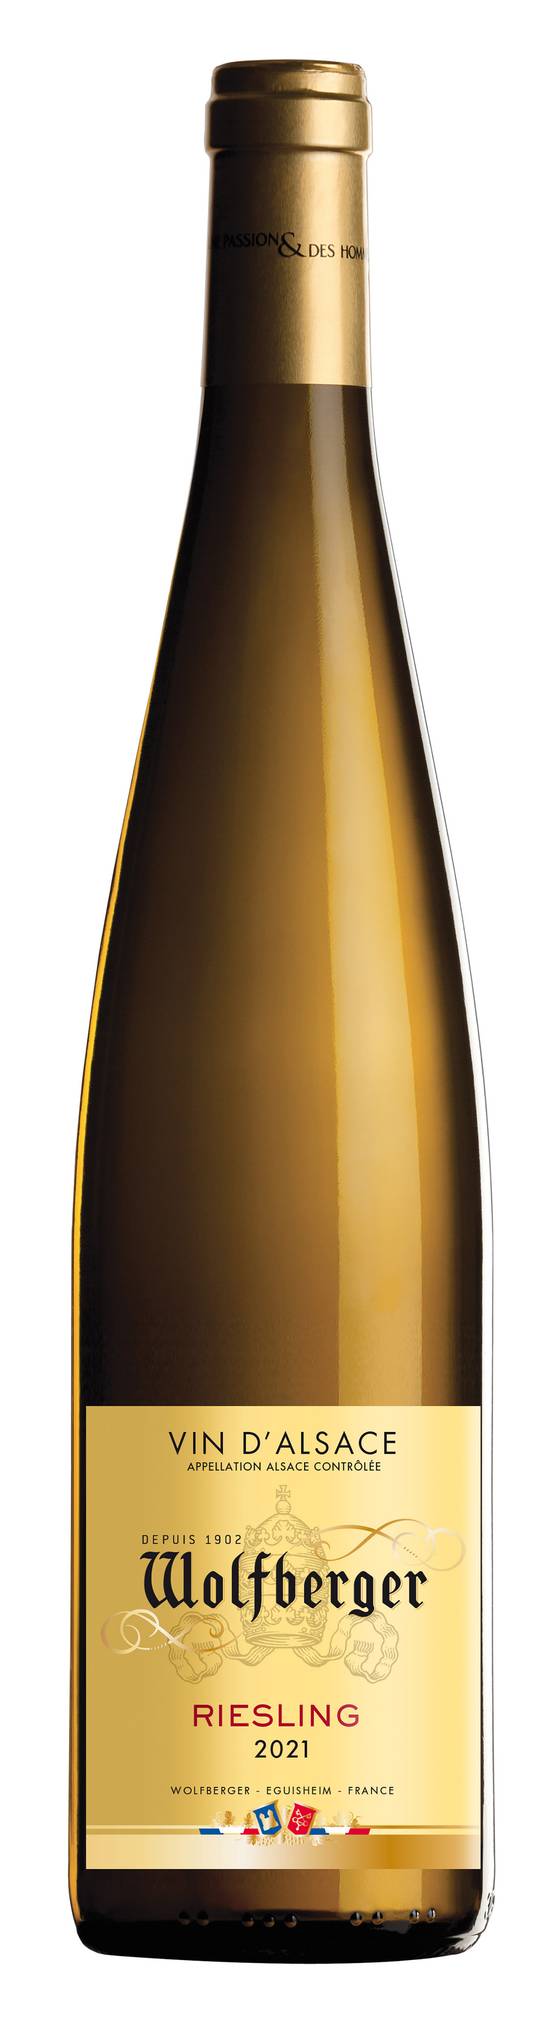 Wolfberger - Vin blanc d'alsace riesling AOP 2020 (750 ml)